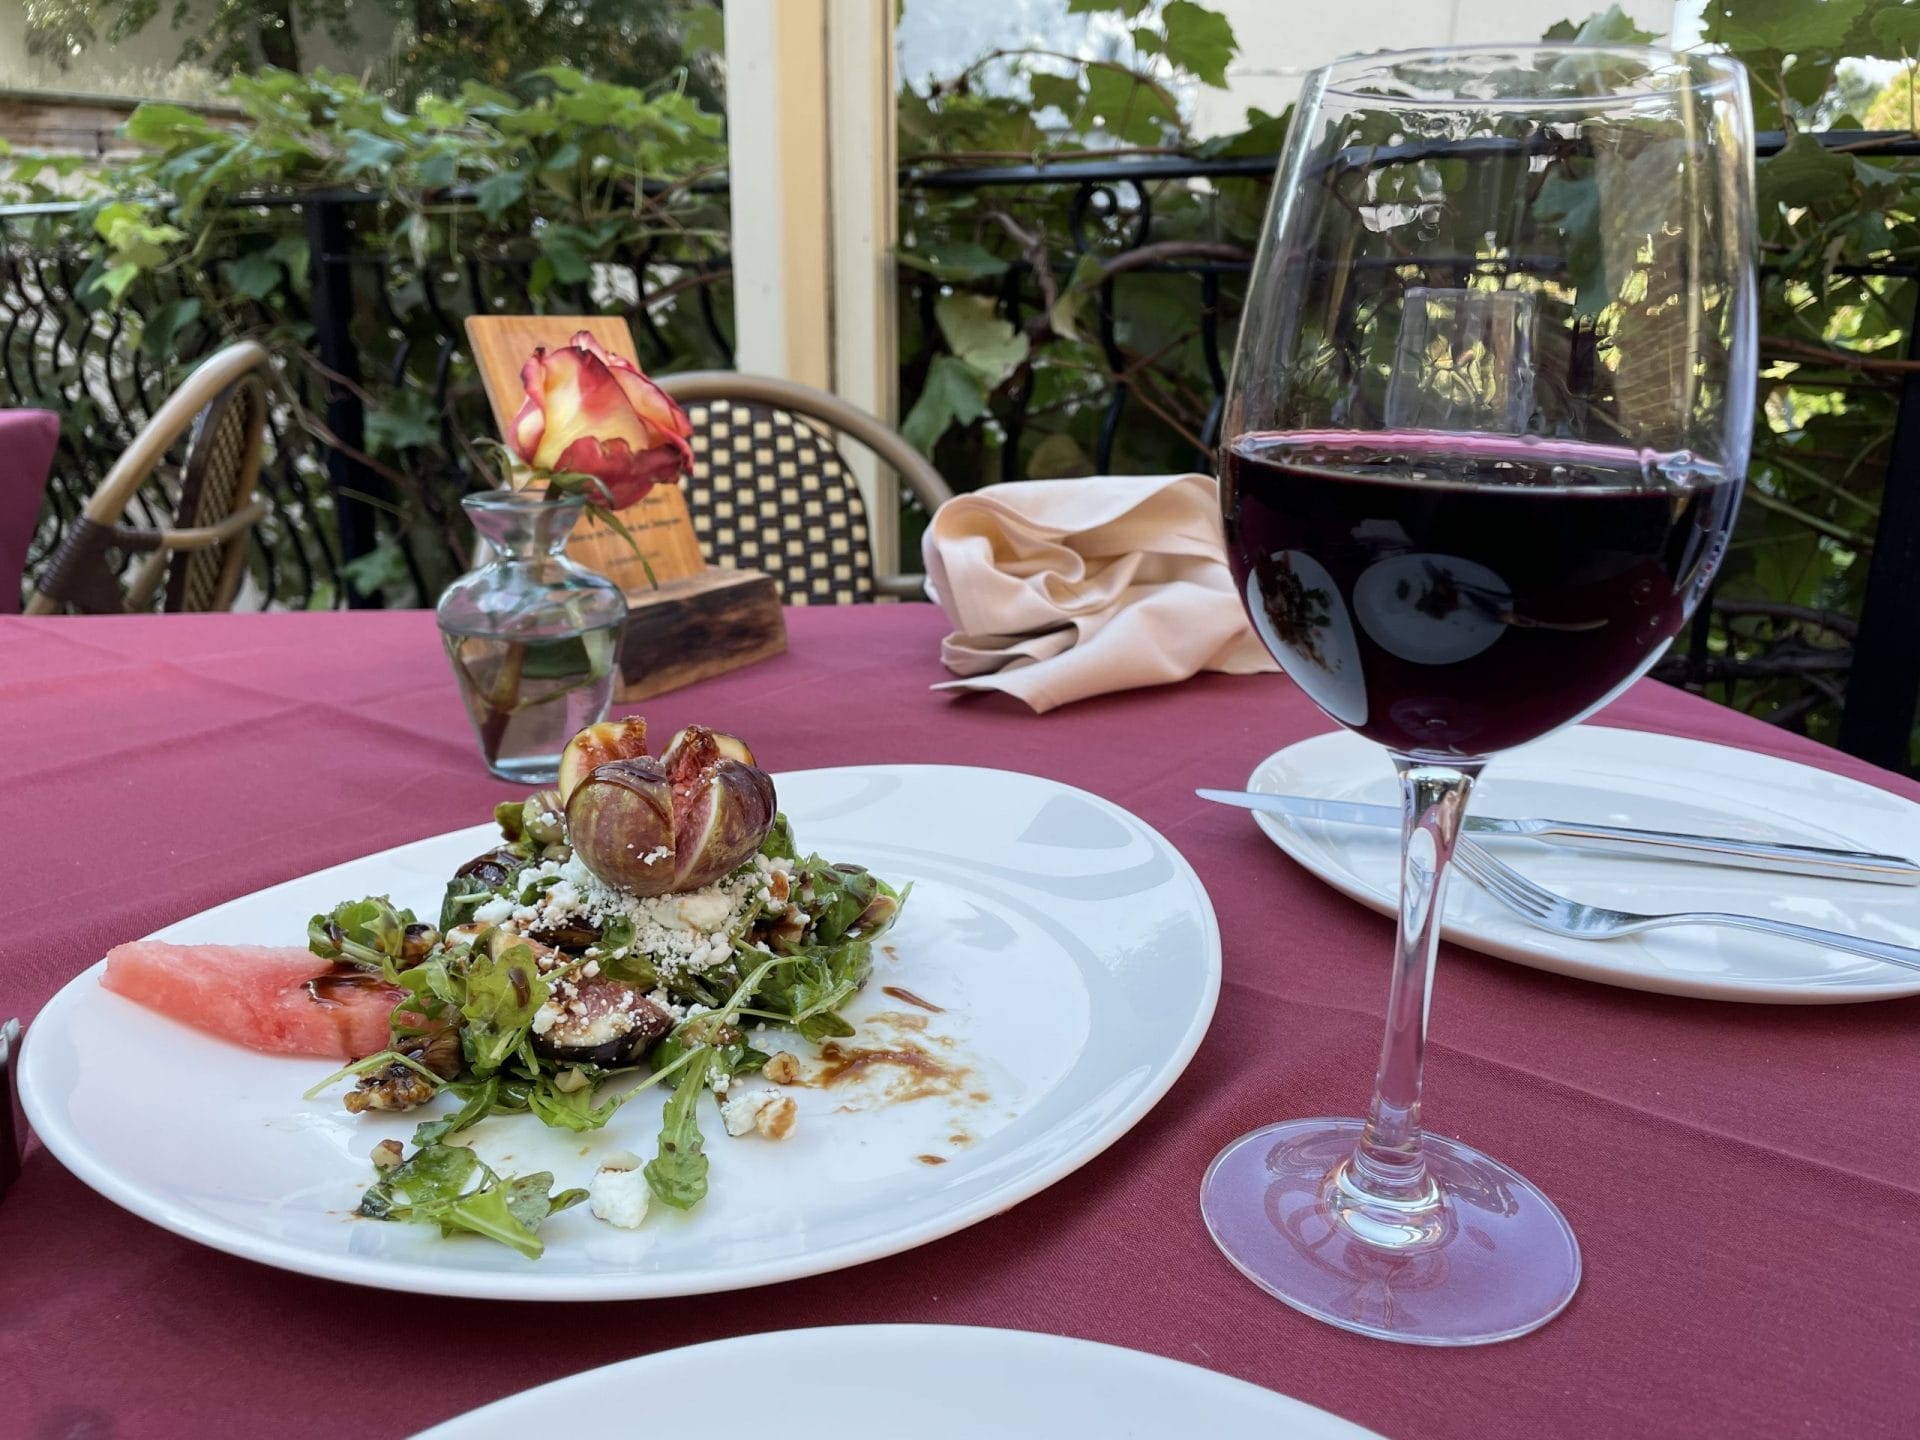 Dubrovnik Salad and Wine Samples